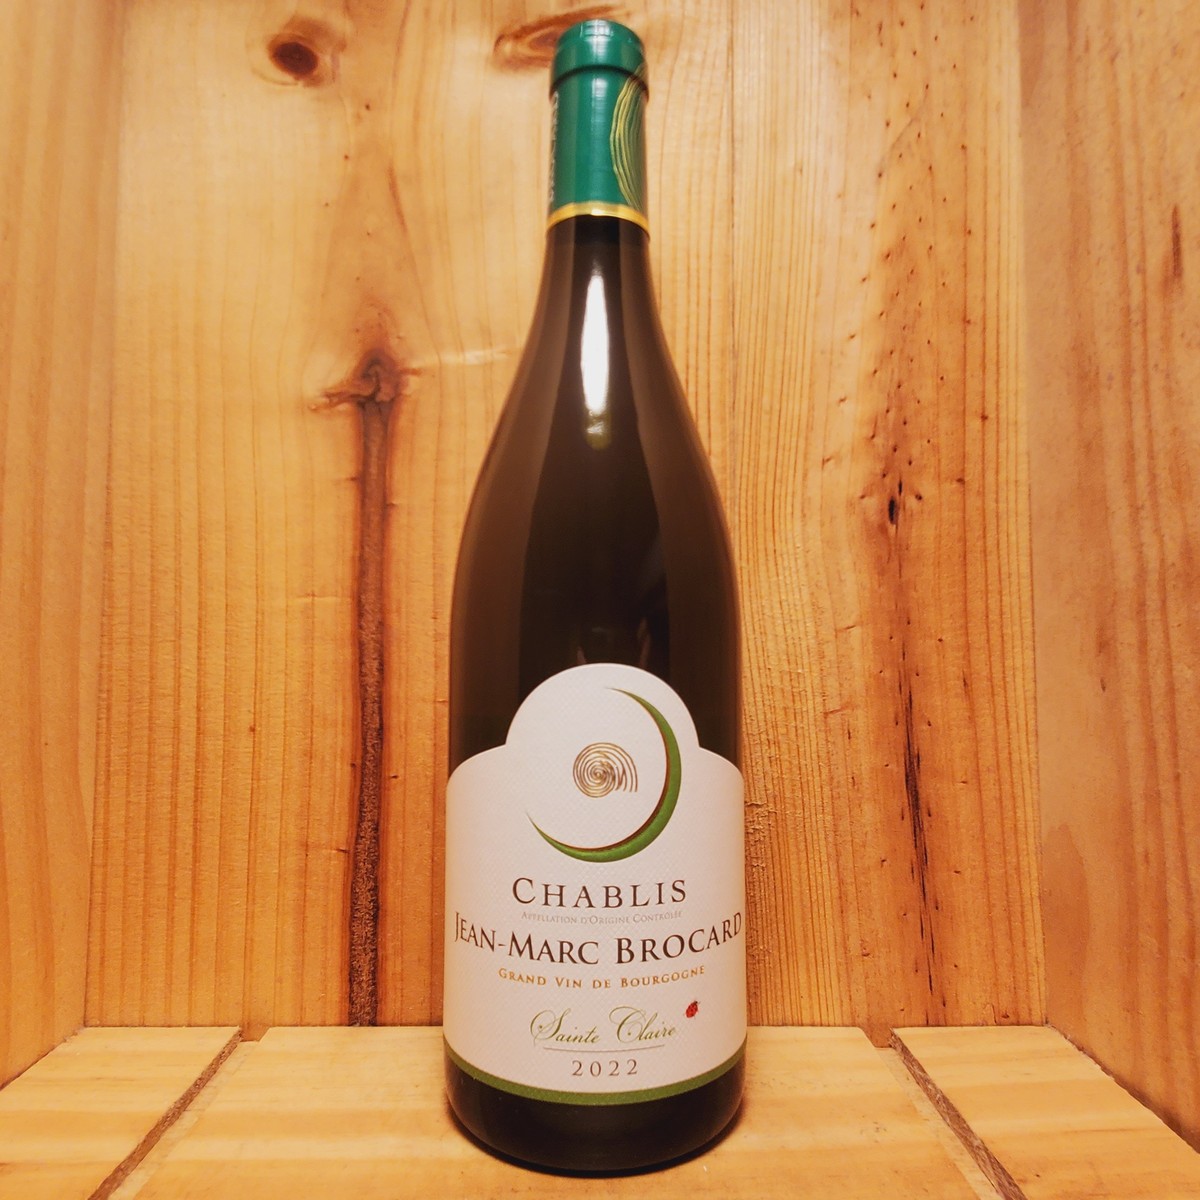 3-PACK GRAND CRU - 750ml - LUMINOUS CHAMPAGNE BOTTLE - Champagne Dot